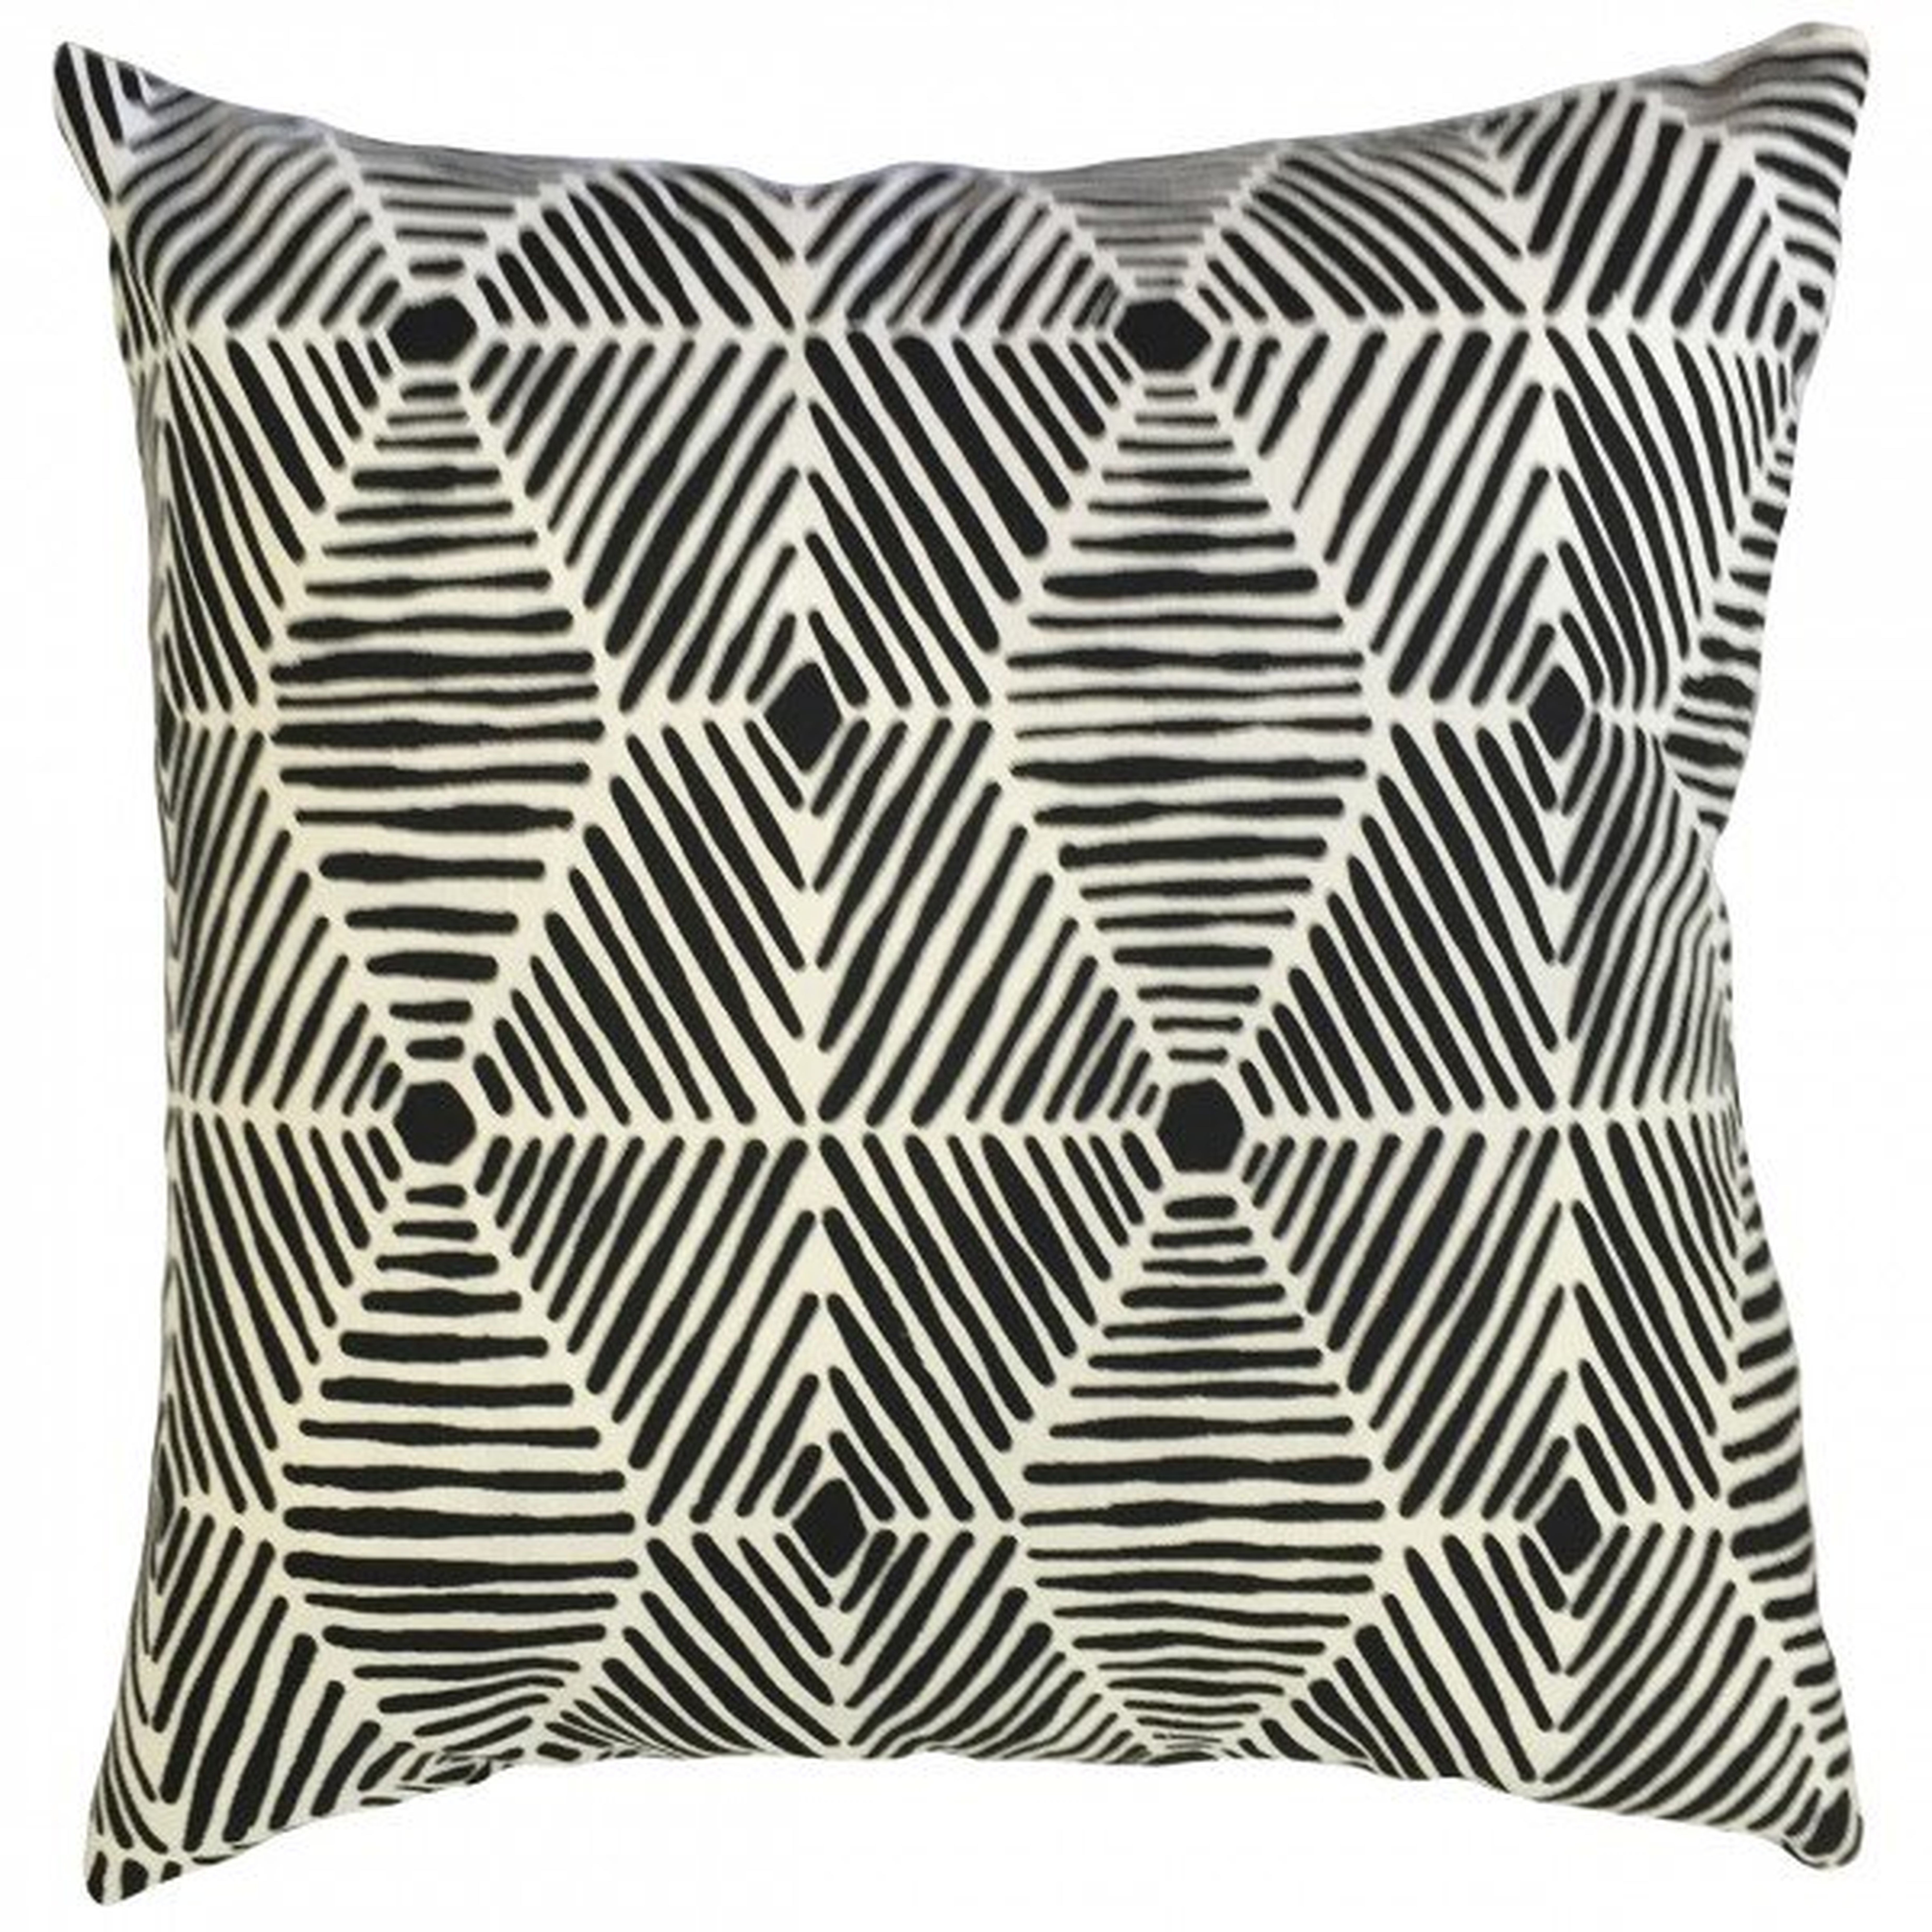 Iakovos Geometric Pillow Black - 18" x 18" poly insert included - Linen & Seam